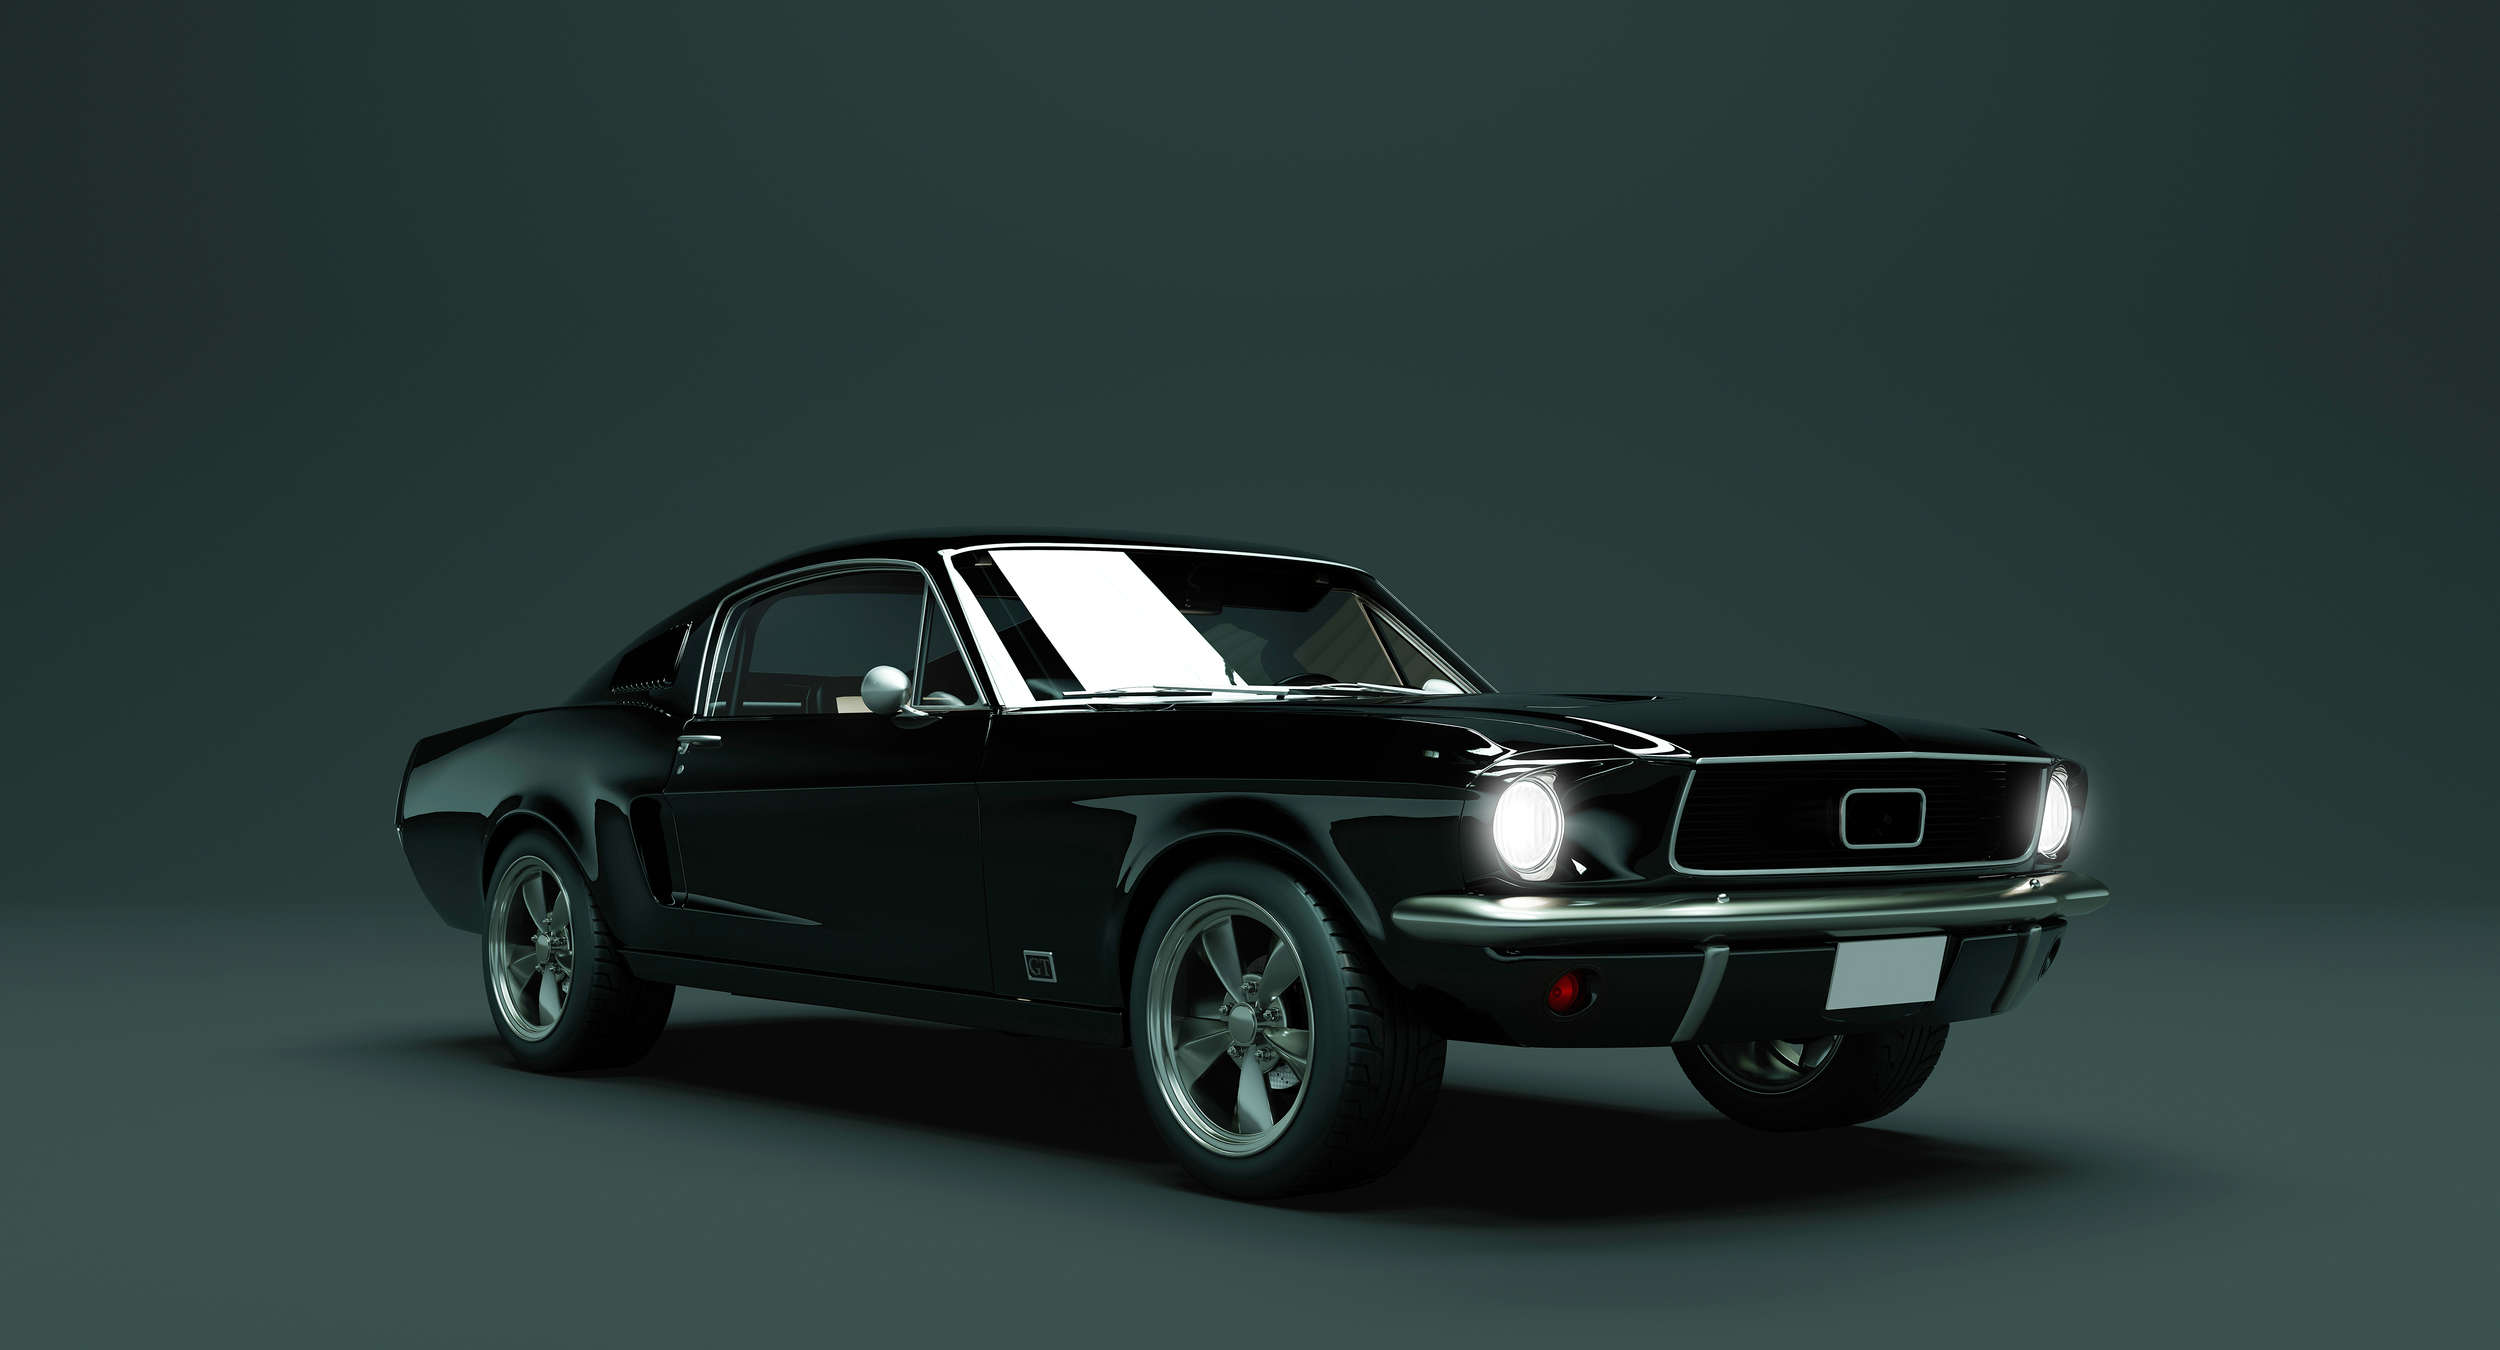             Mustang 2 - Photo wallpaper, Mustang 1968 Vintage Car - Blue, Black | Premium Smooth Non-woven
        